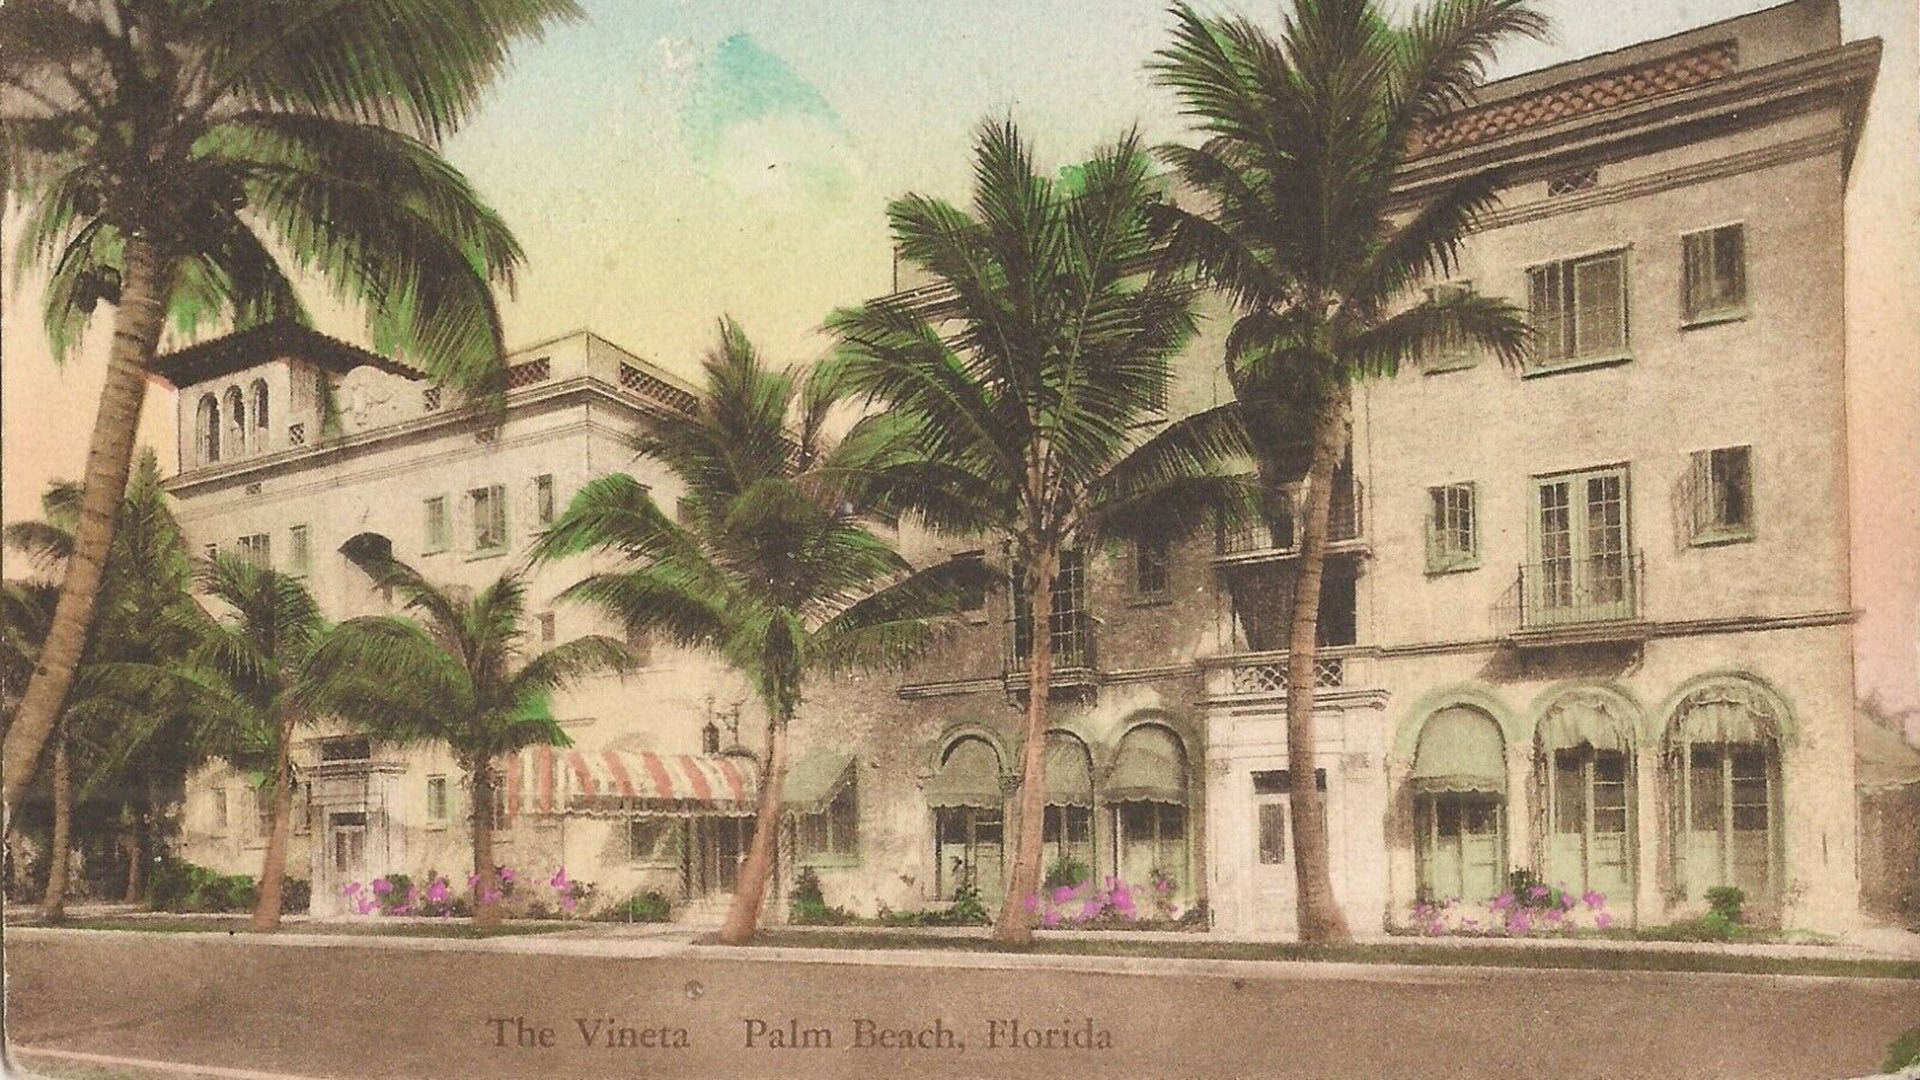 The Vineta vintage postcard colored, image courtesy Oetker Collection